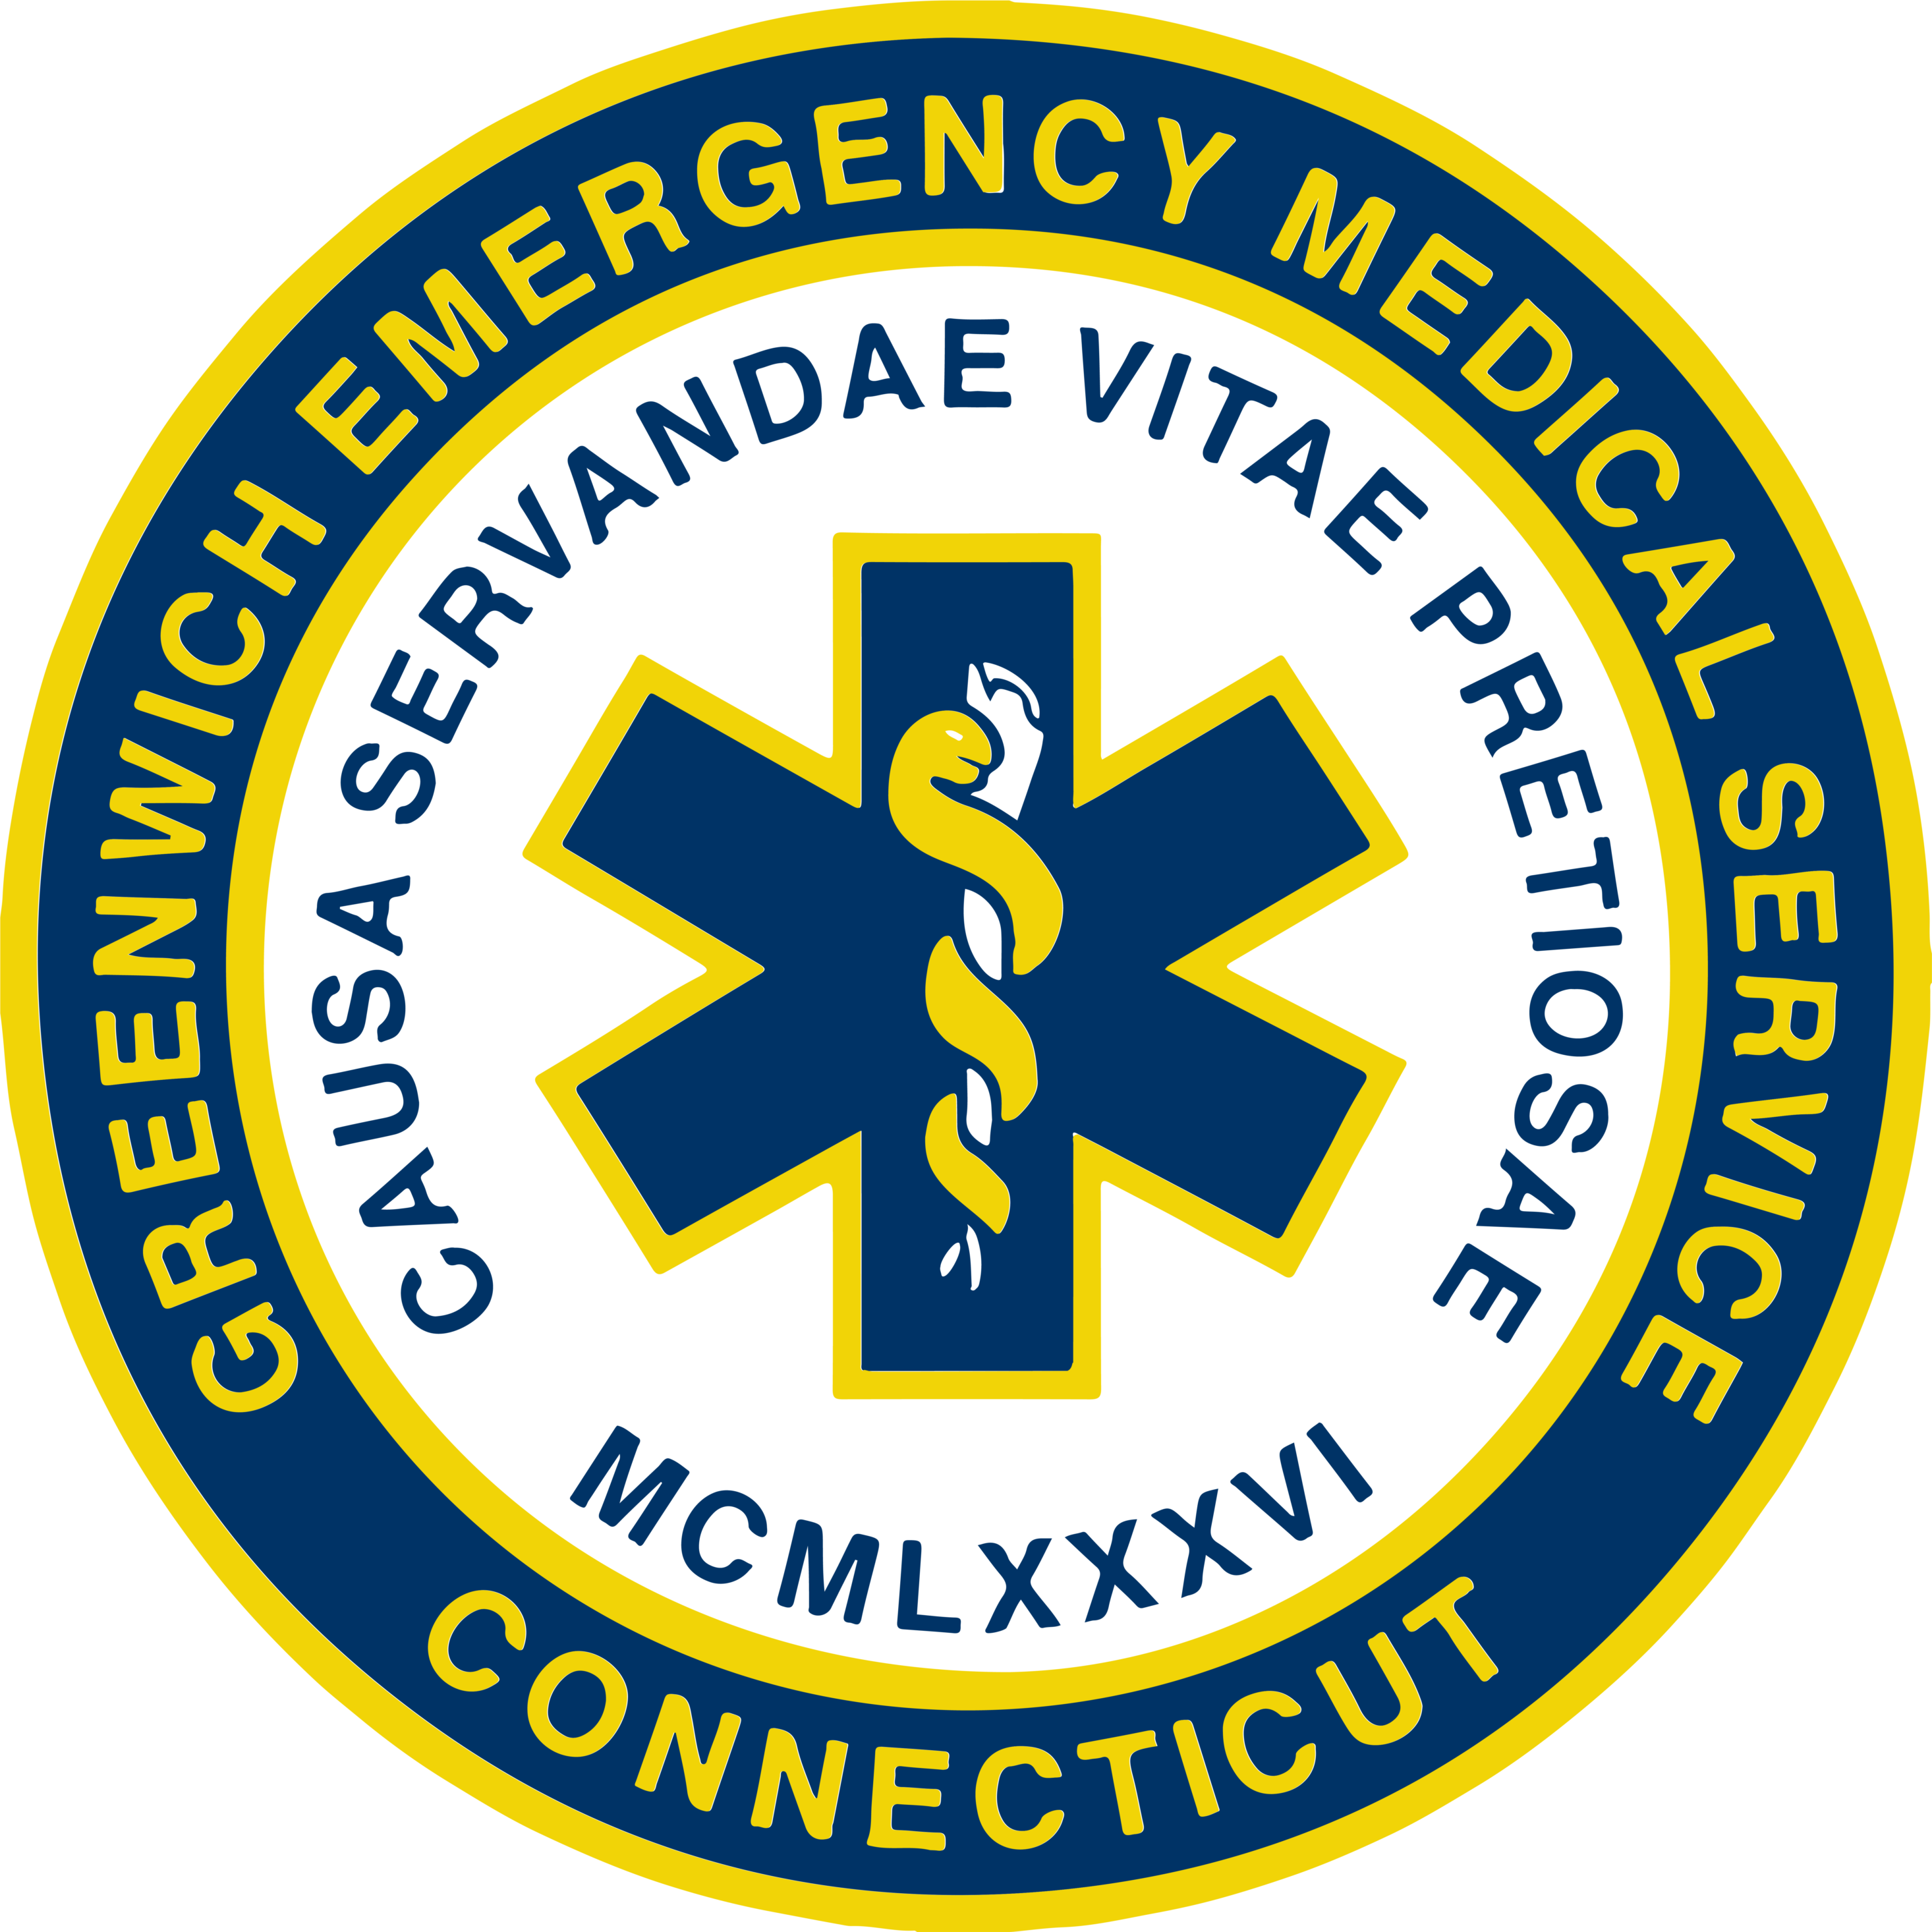 Greenwich Emergency Medical Service Company Logo